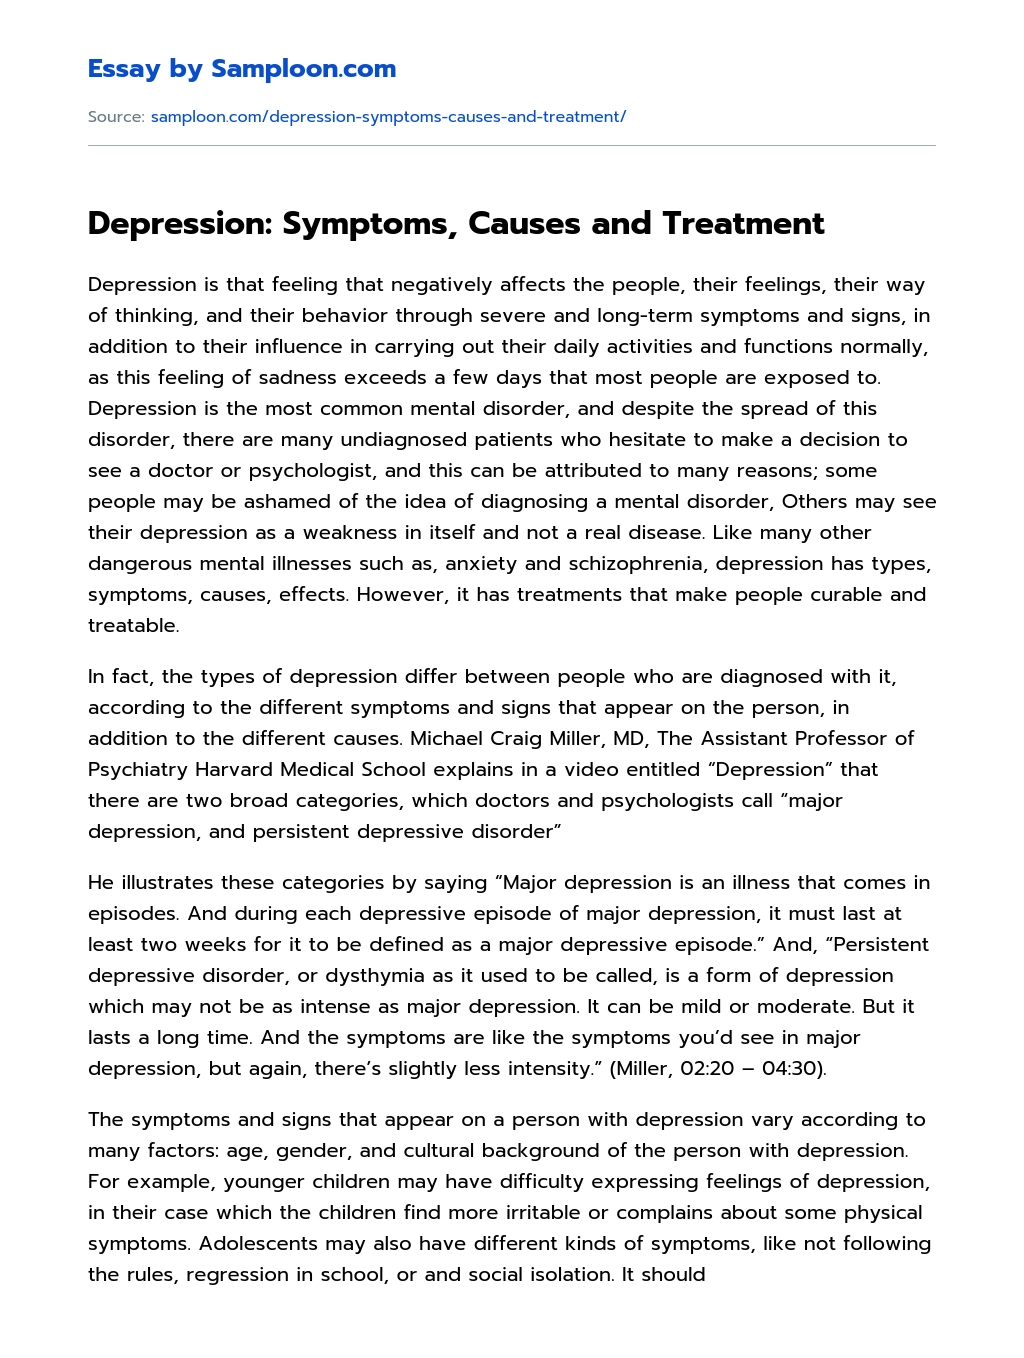 Depression: Symptoms, Causes and Treatment essay